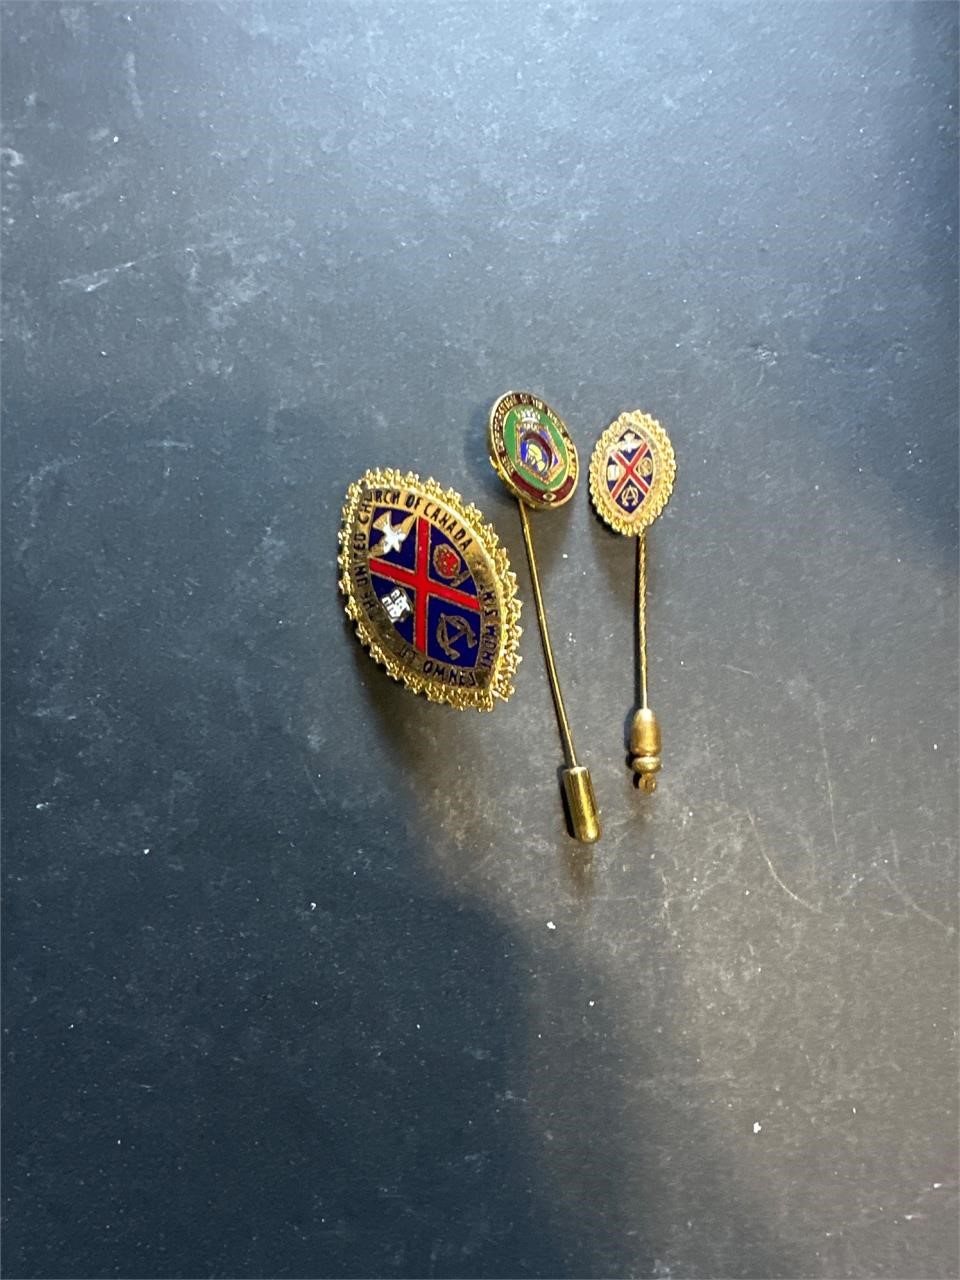 Antique collectable church pins